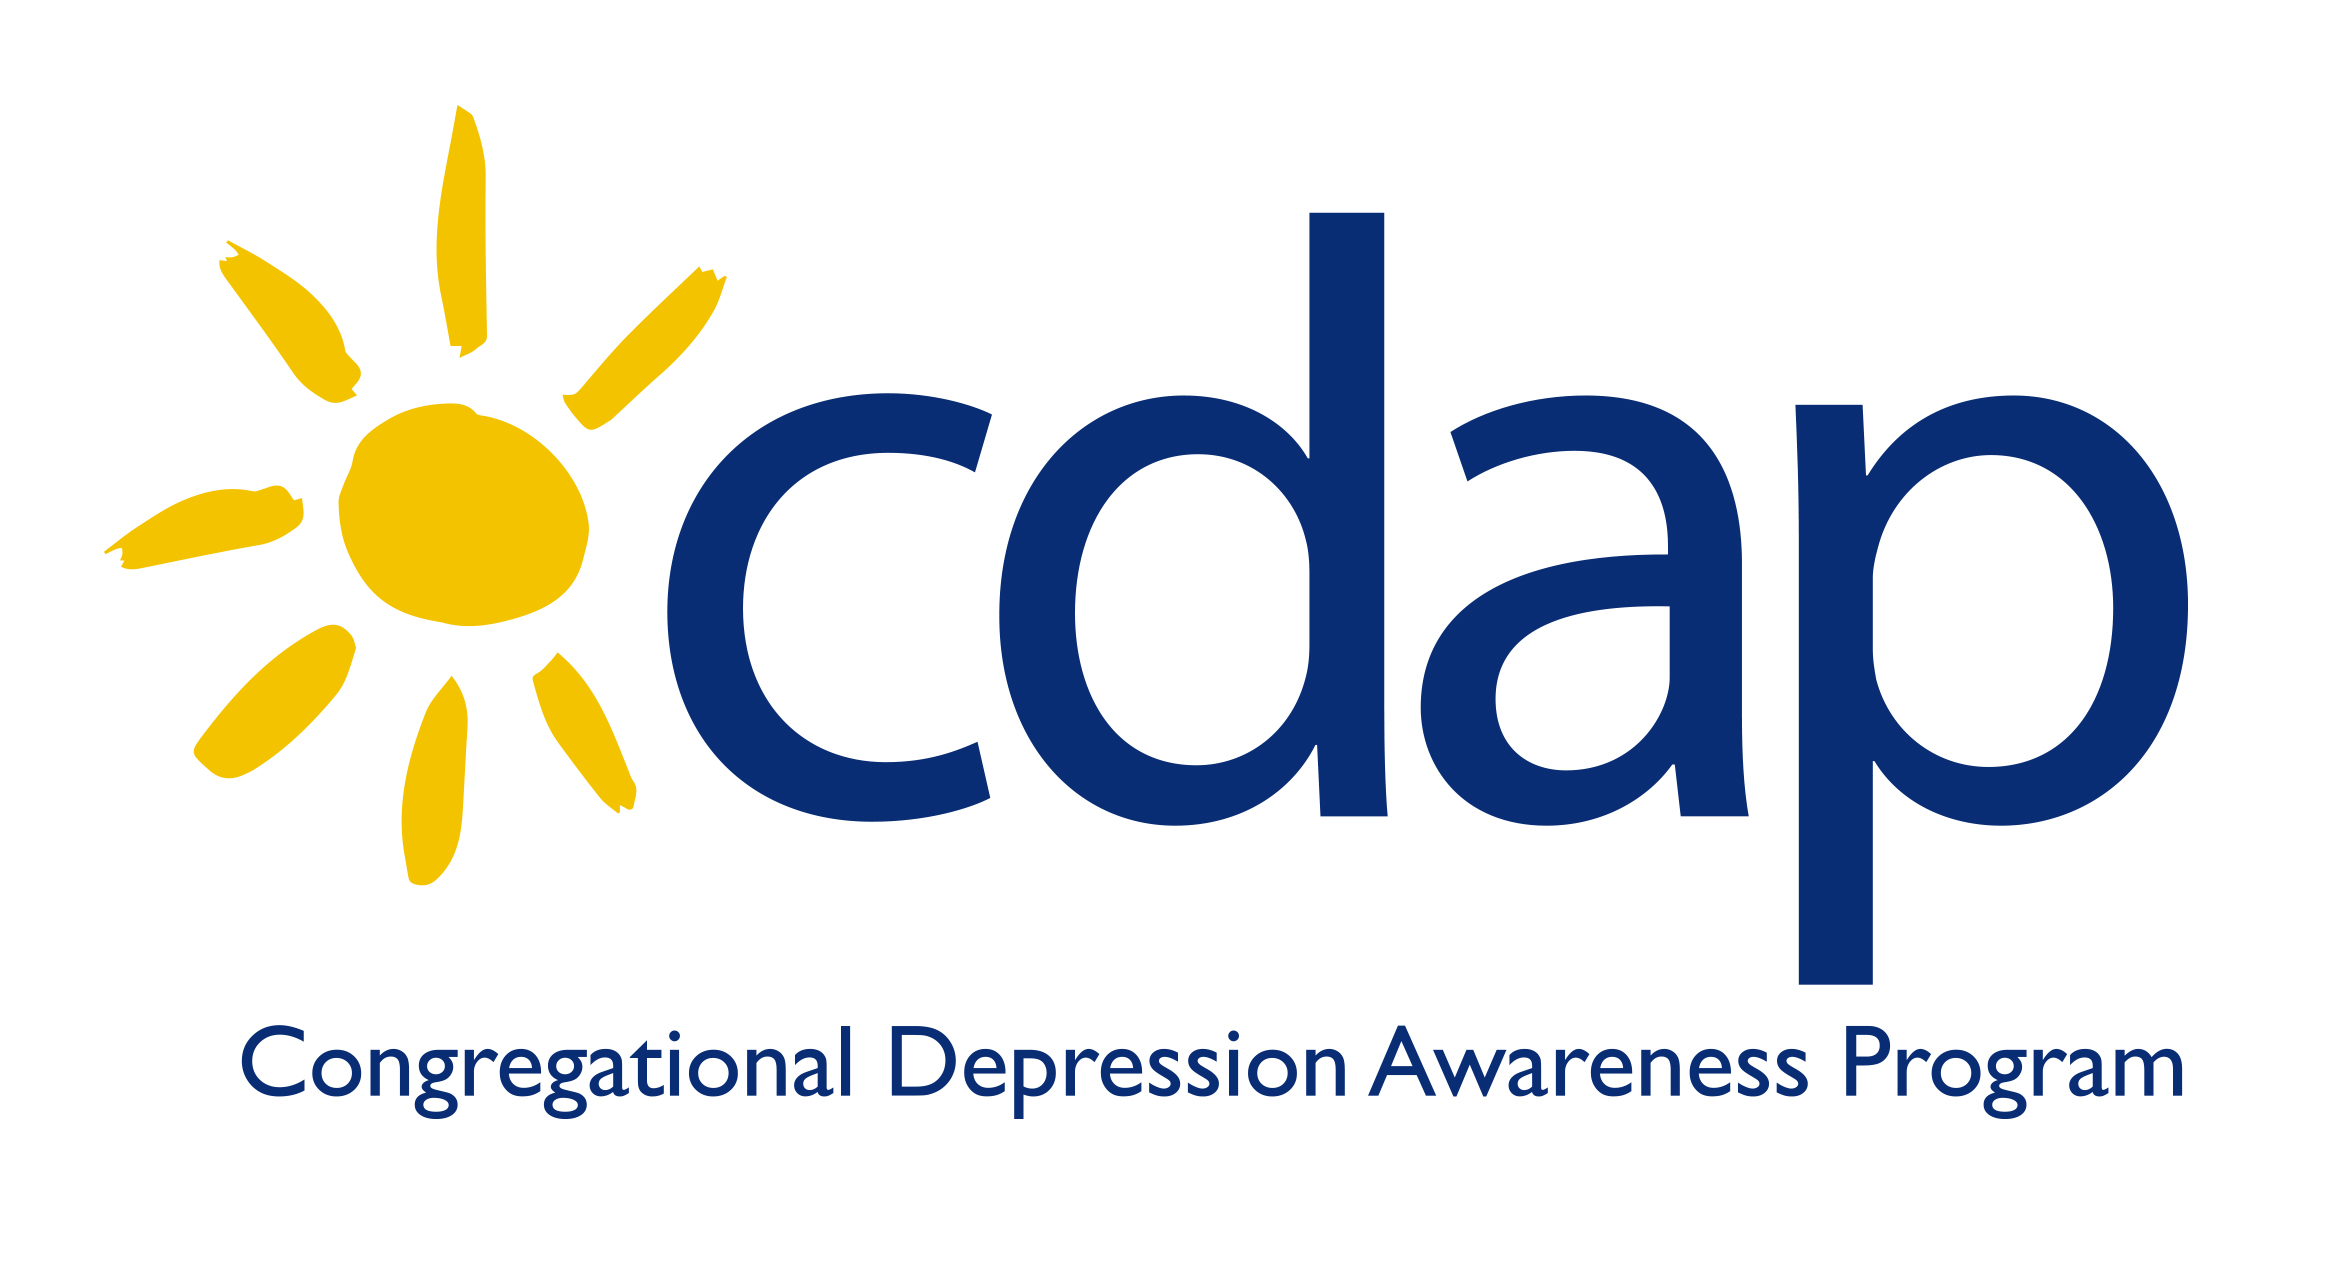 Congregational Depression Awareness logo with hand drawn yellow sun